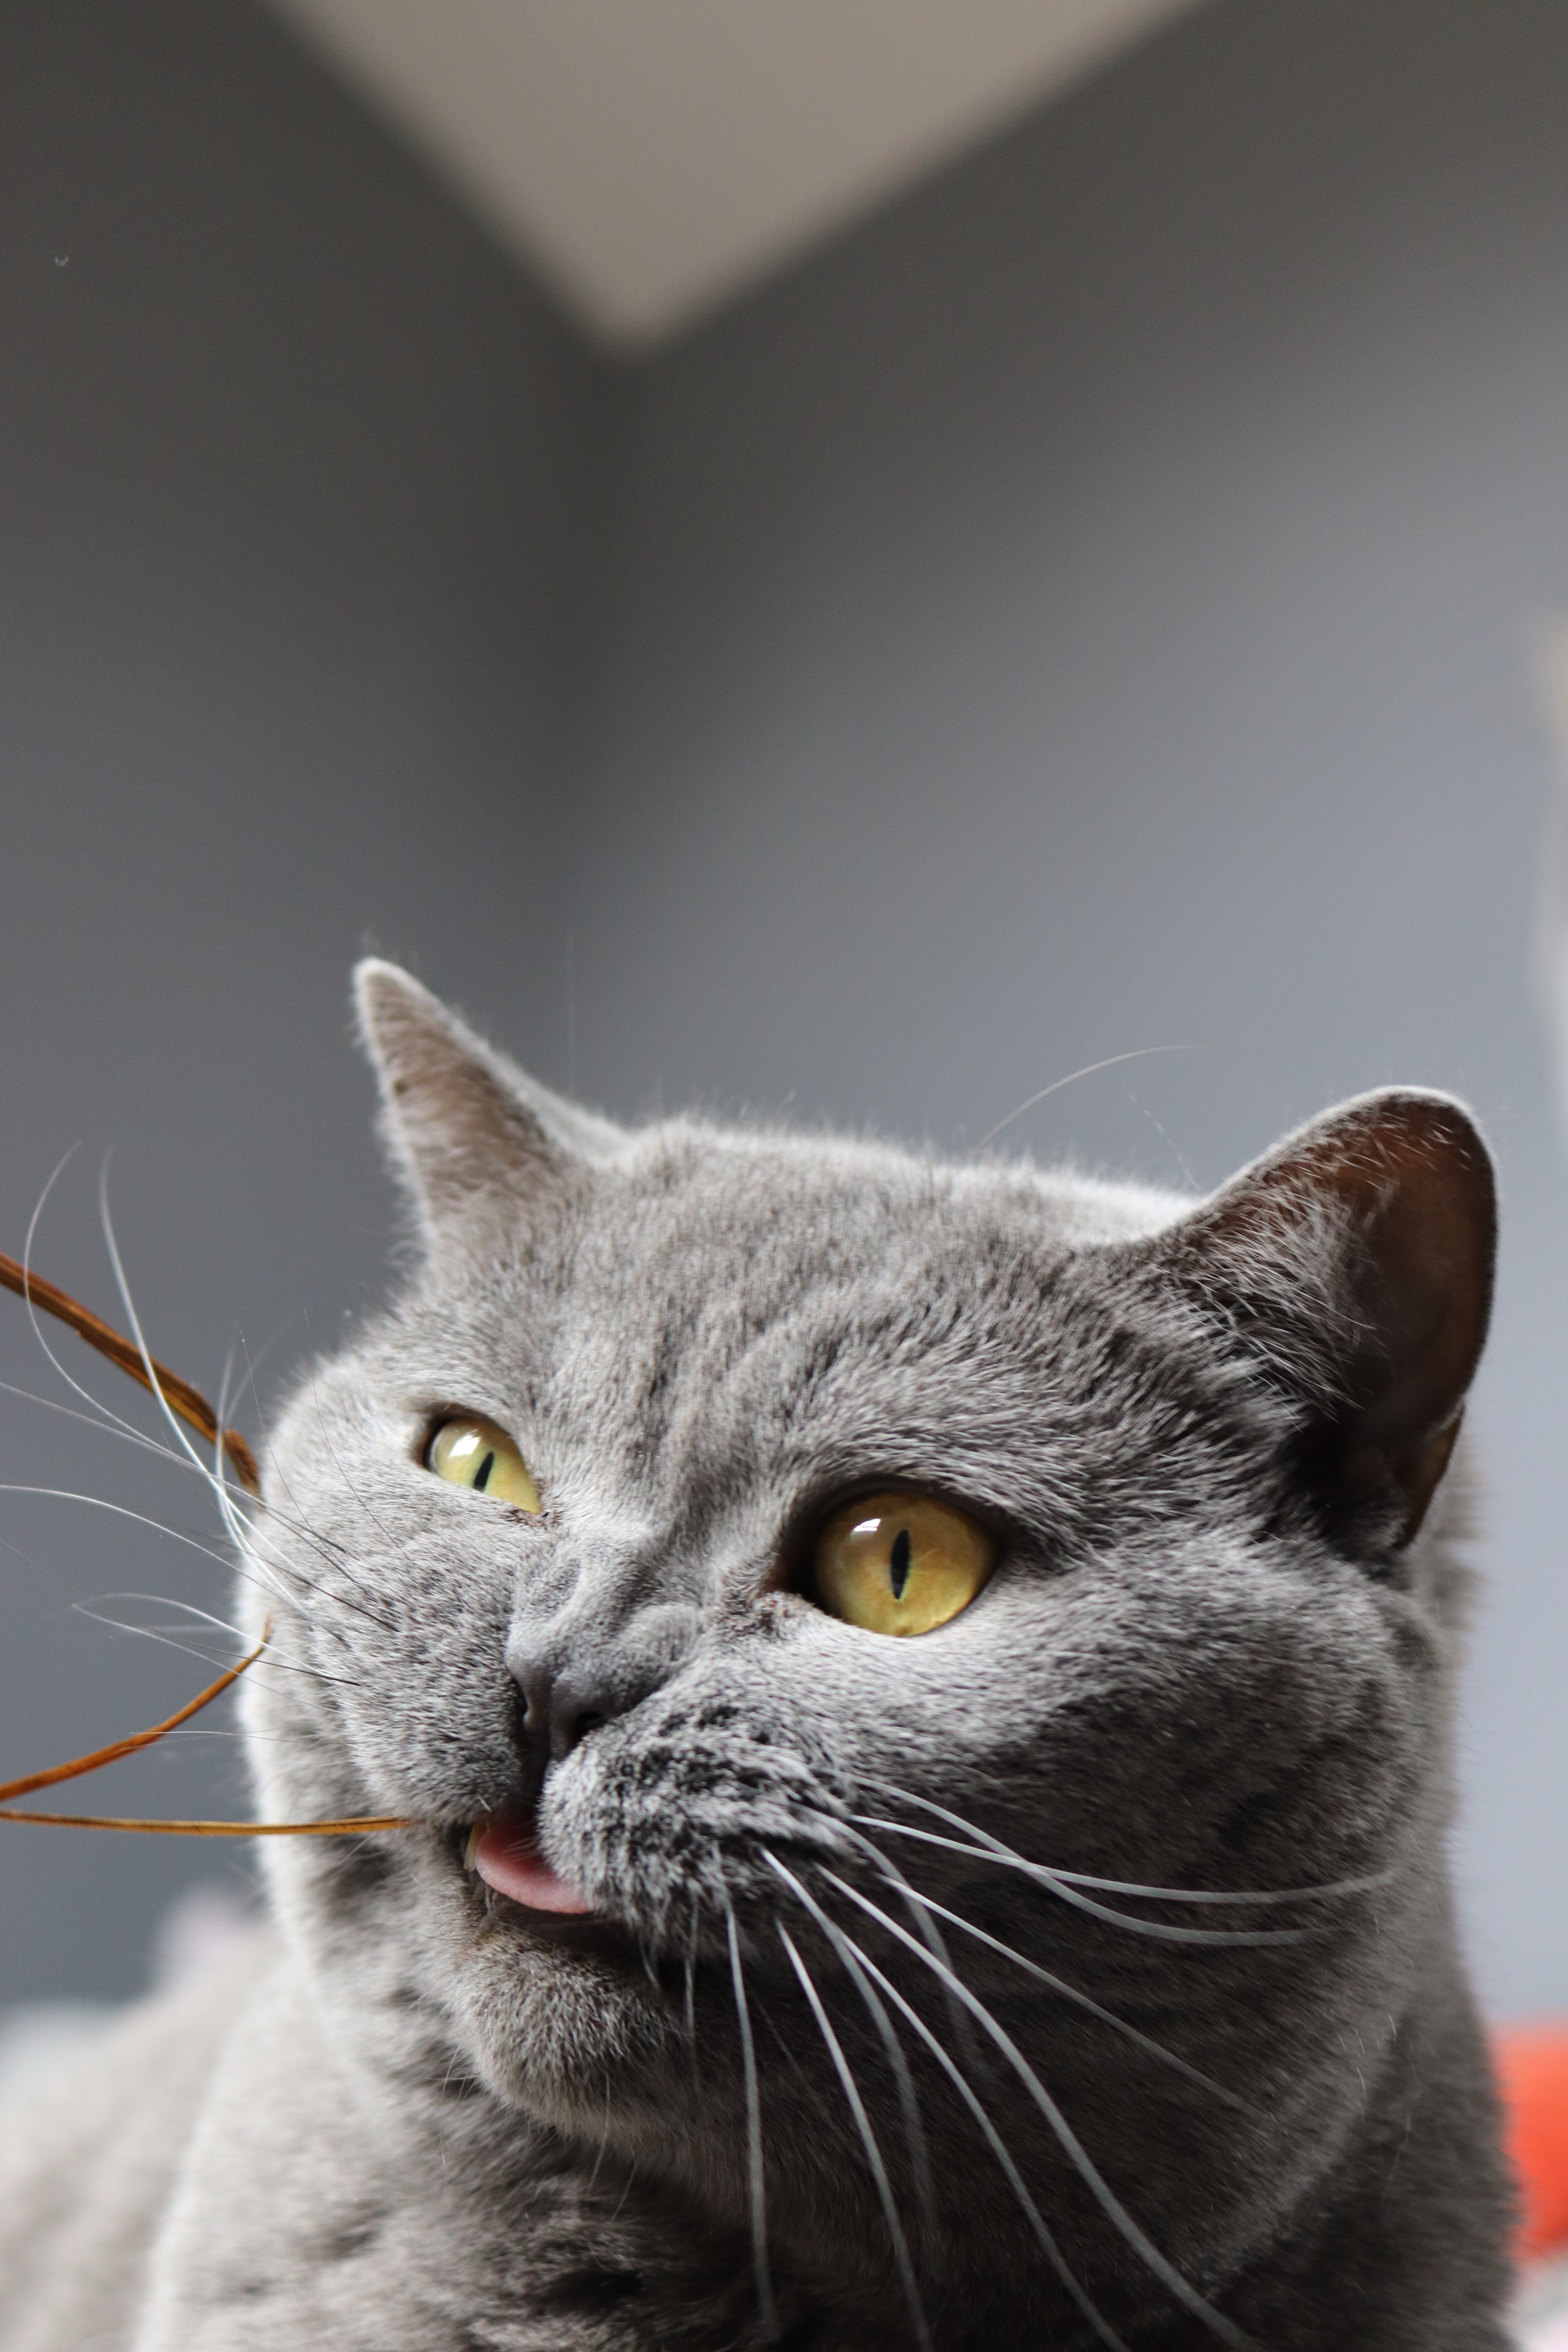 Descarga gratis la imagen Gato, Mascota, Fresco, Gracioso, Animales en el escritorio de tu PC